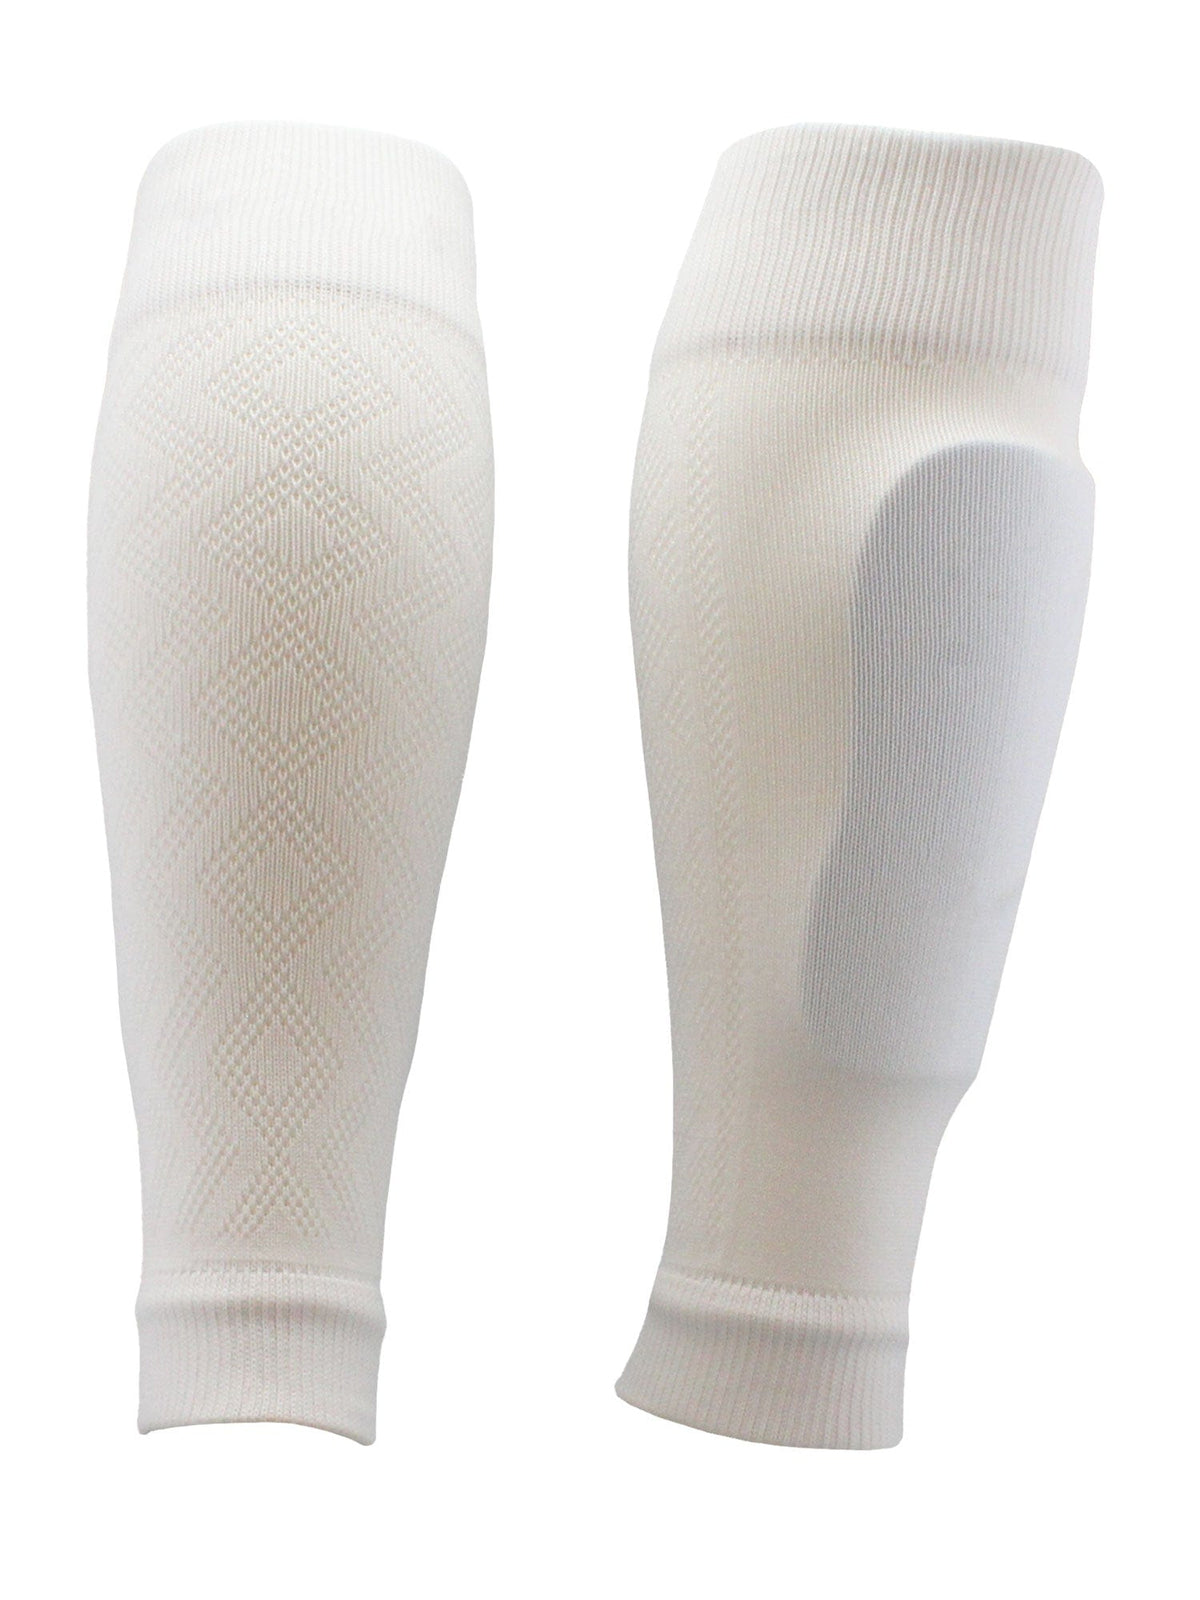 Soccer Football Protective Socks Shin Guard Pads Leg Sleeves